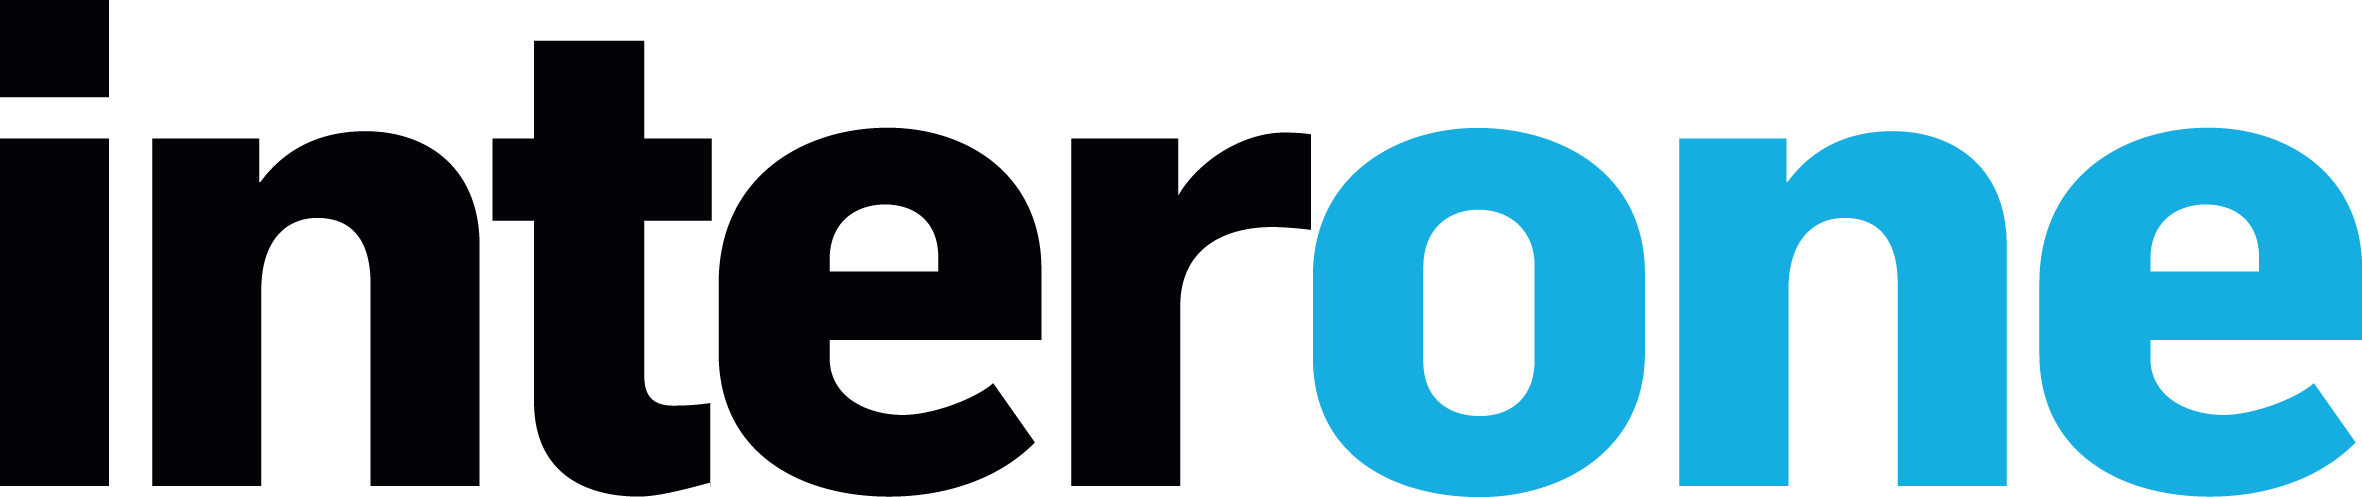 logo-interone-2017-12-08